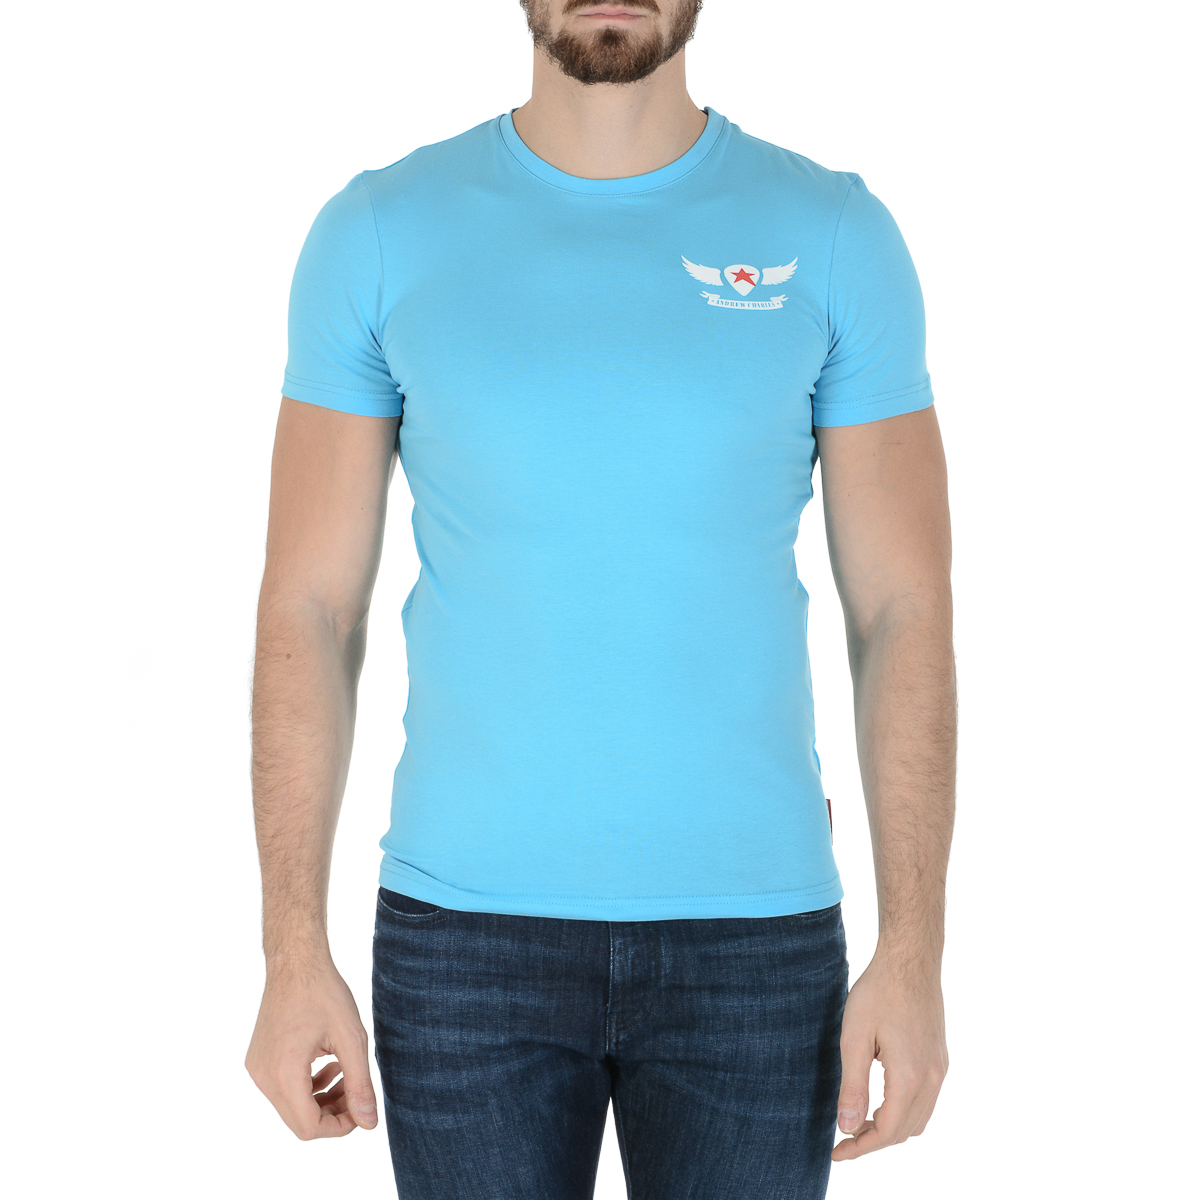 Andrew Charles Mens T-Shirt Short Sleeves Round Neck Light Blue KEITA